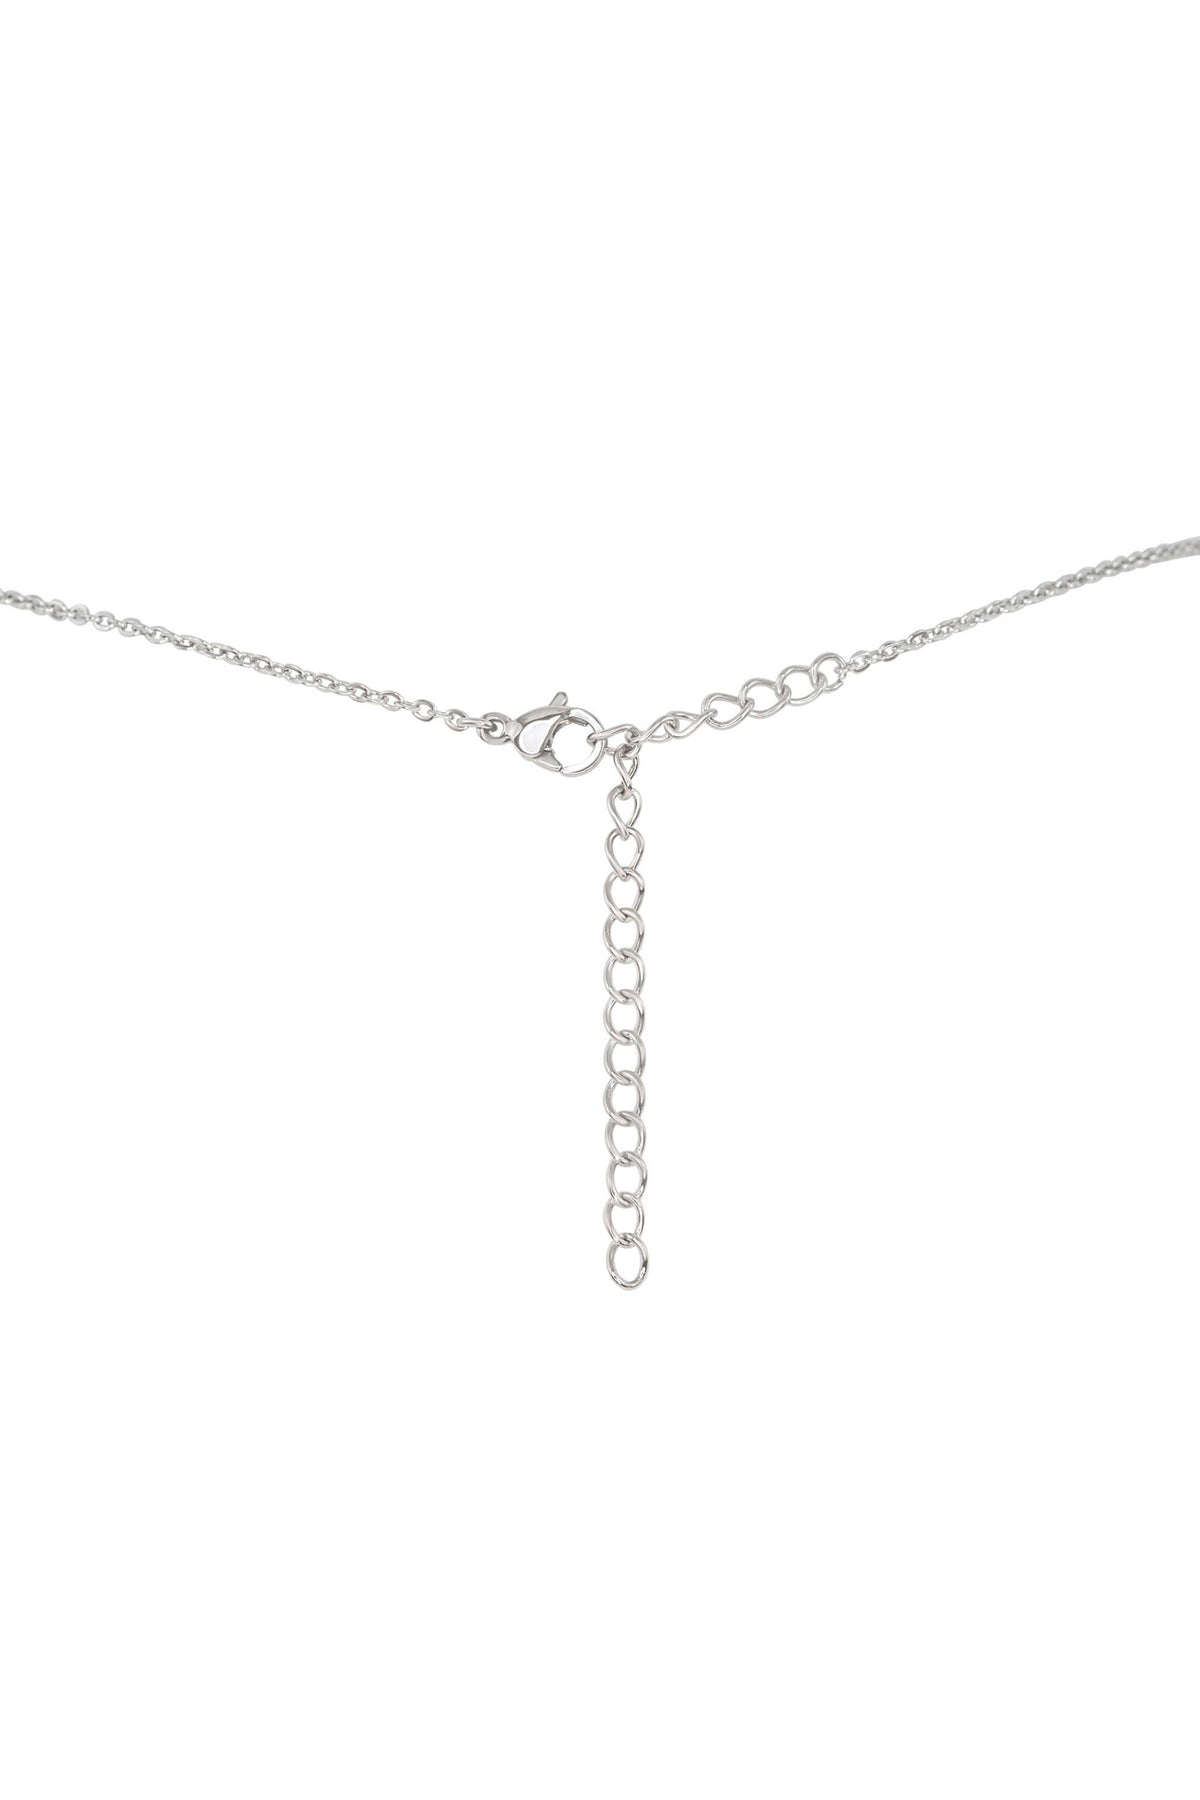 Raw Crystal Pendant Choker - Citrine - Stainless Steel - Luna Tide Handmade Jewellery